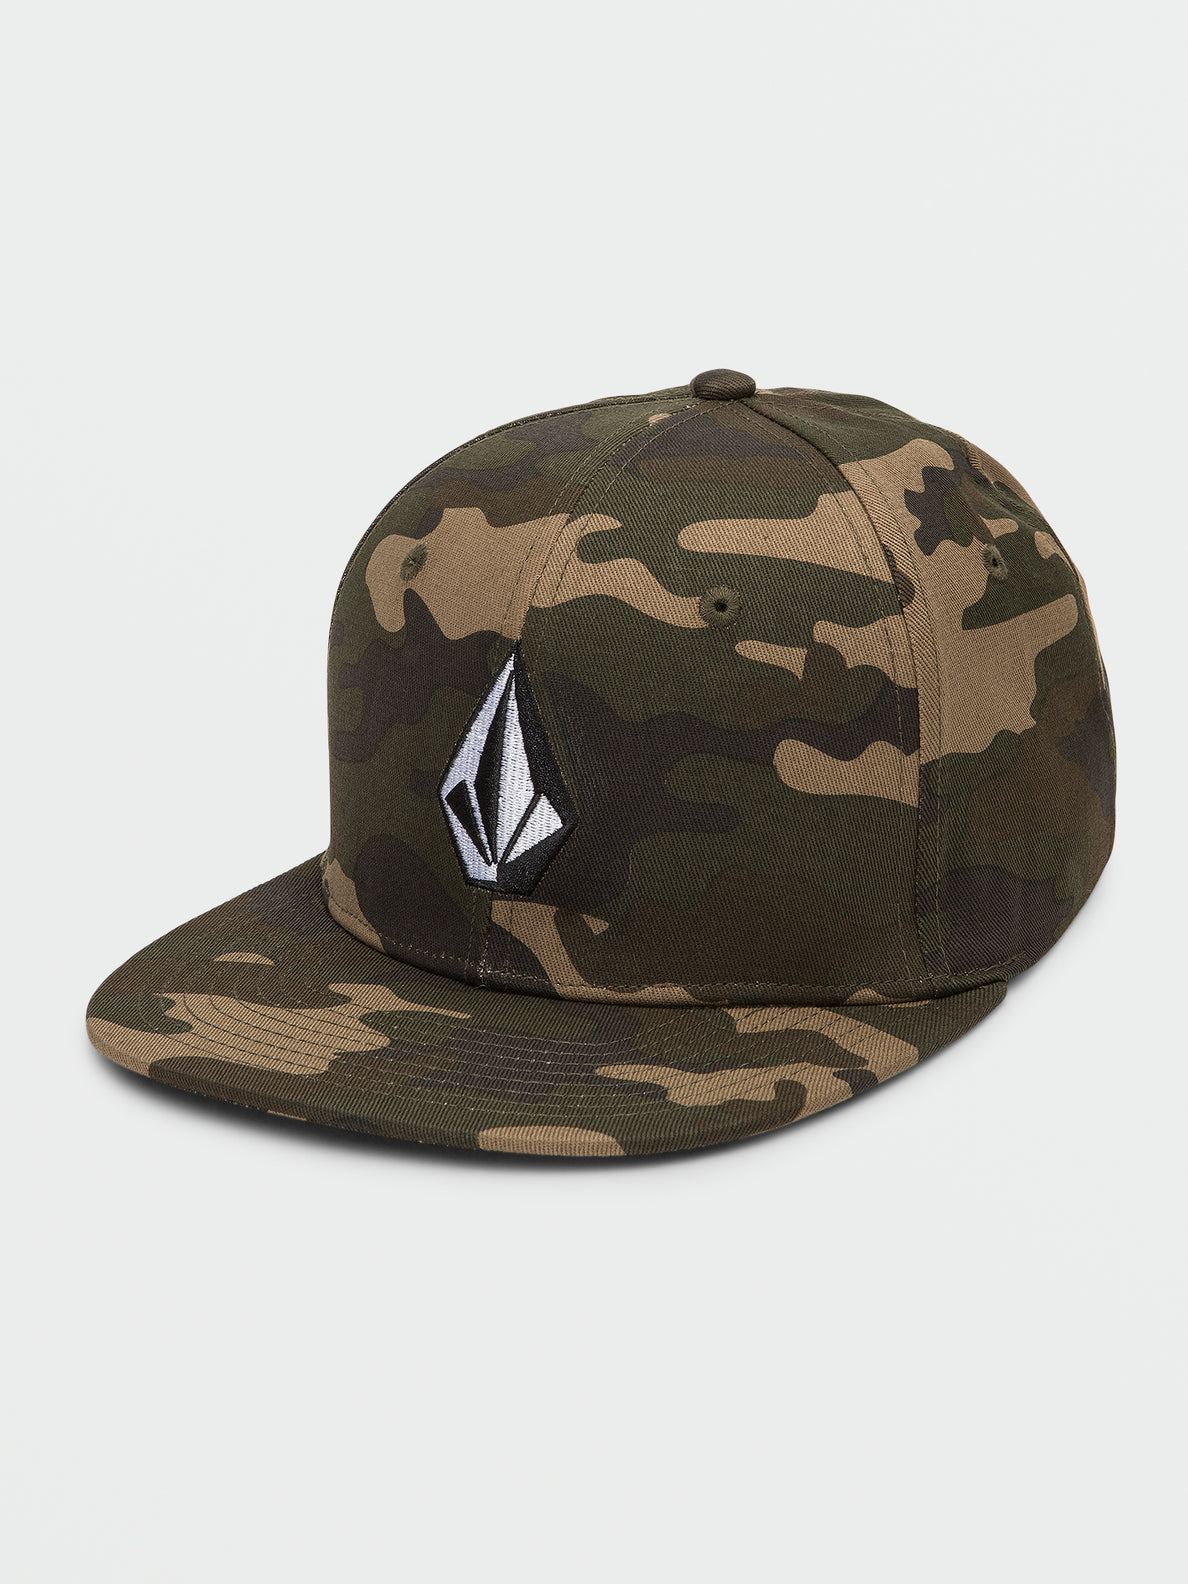 V Full Stone Xfit 2 Hat - Camouflage